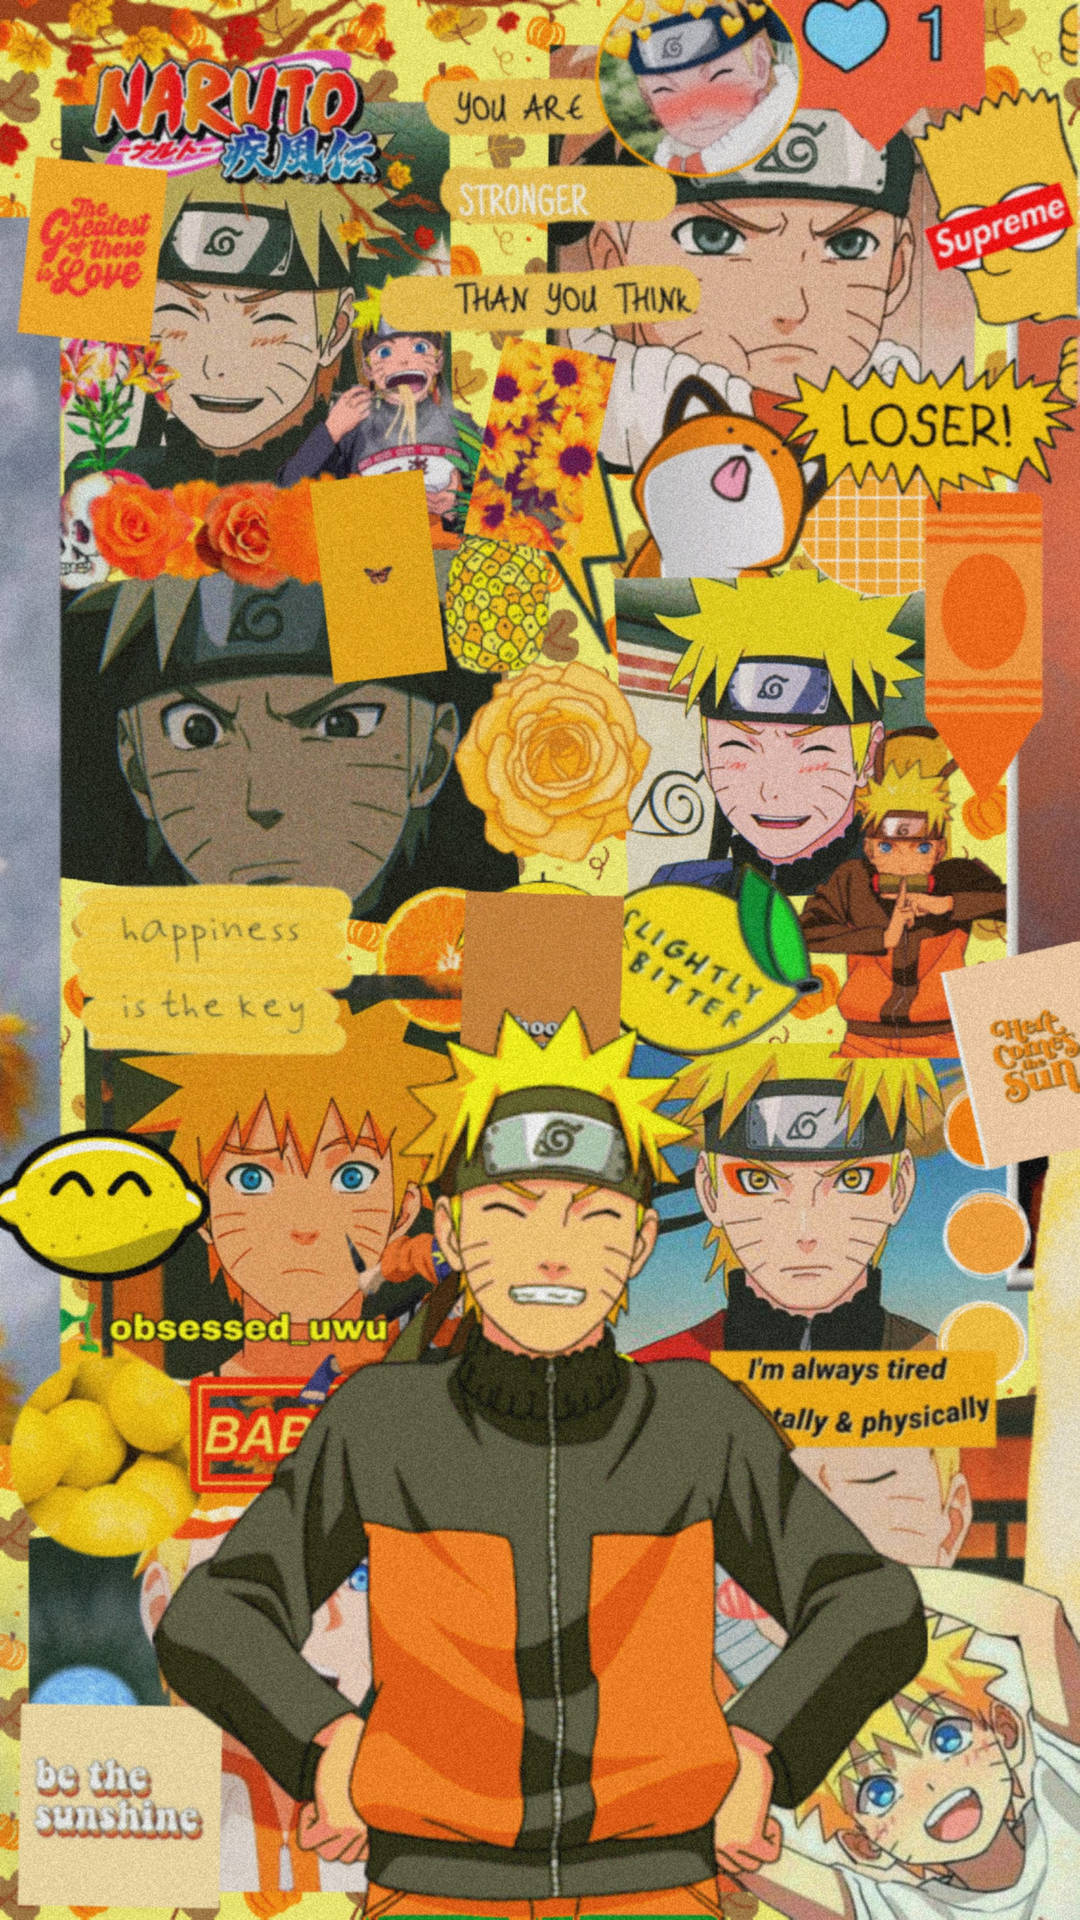 Rejs gennem Naruto-verdenen på en dristig ny måde med hjælp fra Yellow Naruto! Wallpaper